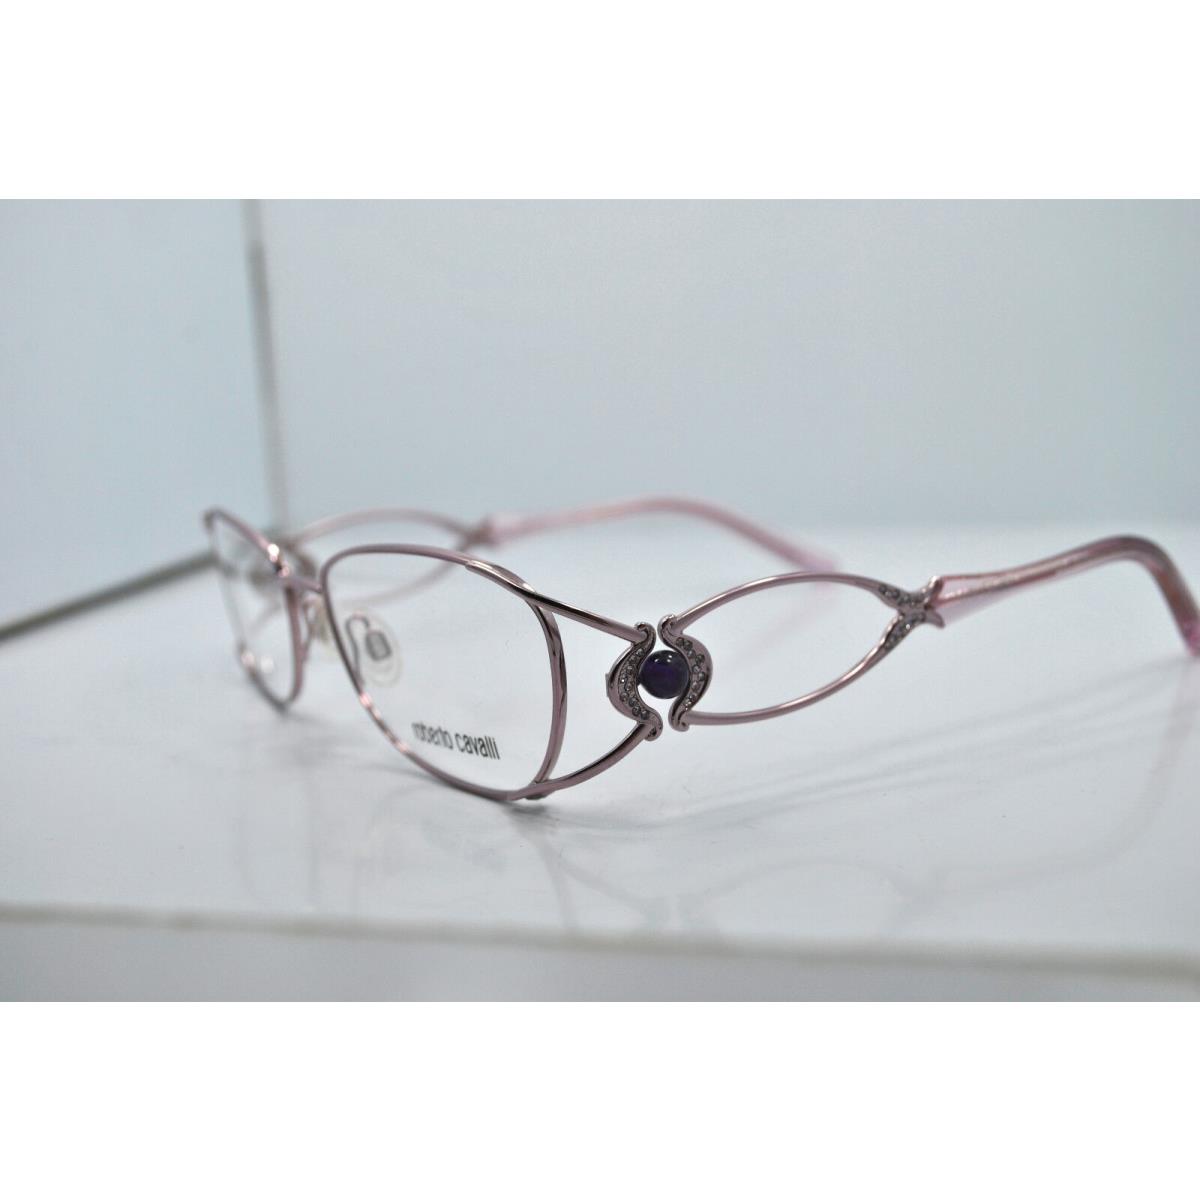 Roberto Cavalli Tiglio 631 072 Eyeglasses Frame